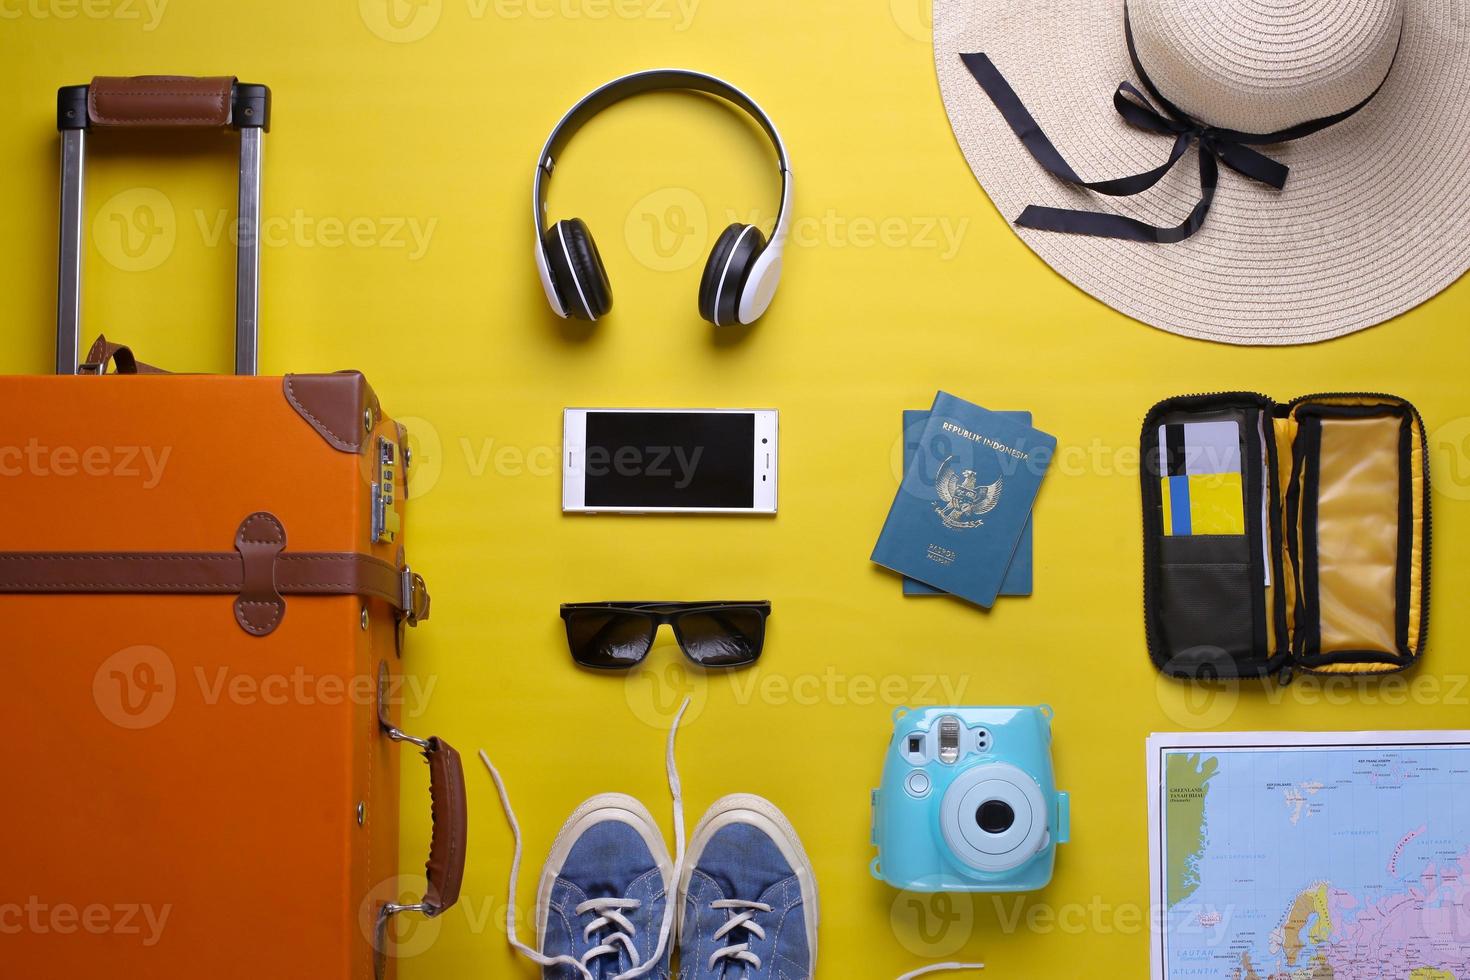 maleta naranja plana con accesorios de viajero sobre fondo amarillo. concepto de viaje foto